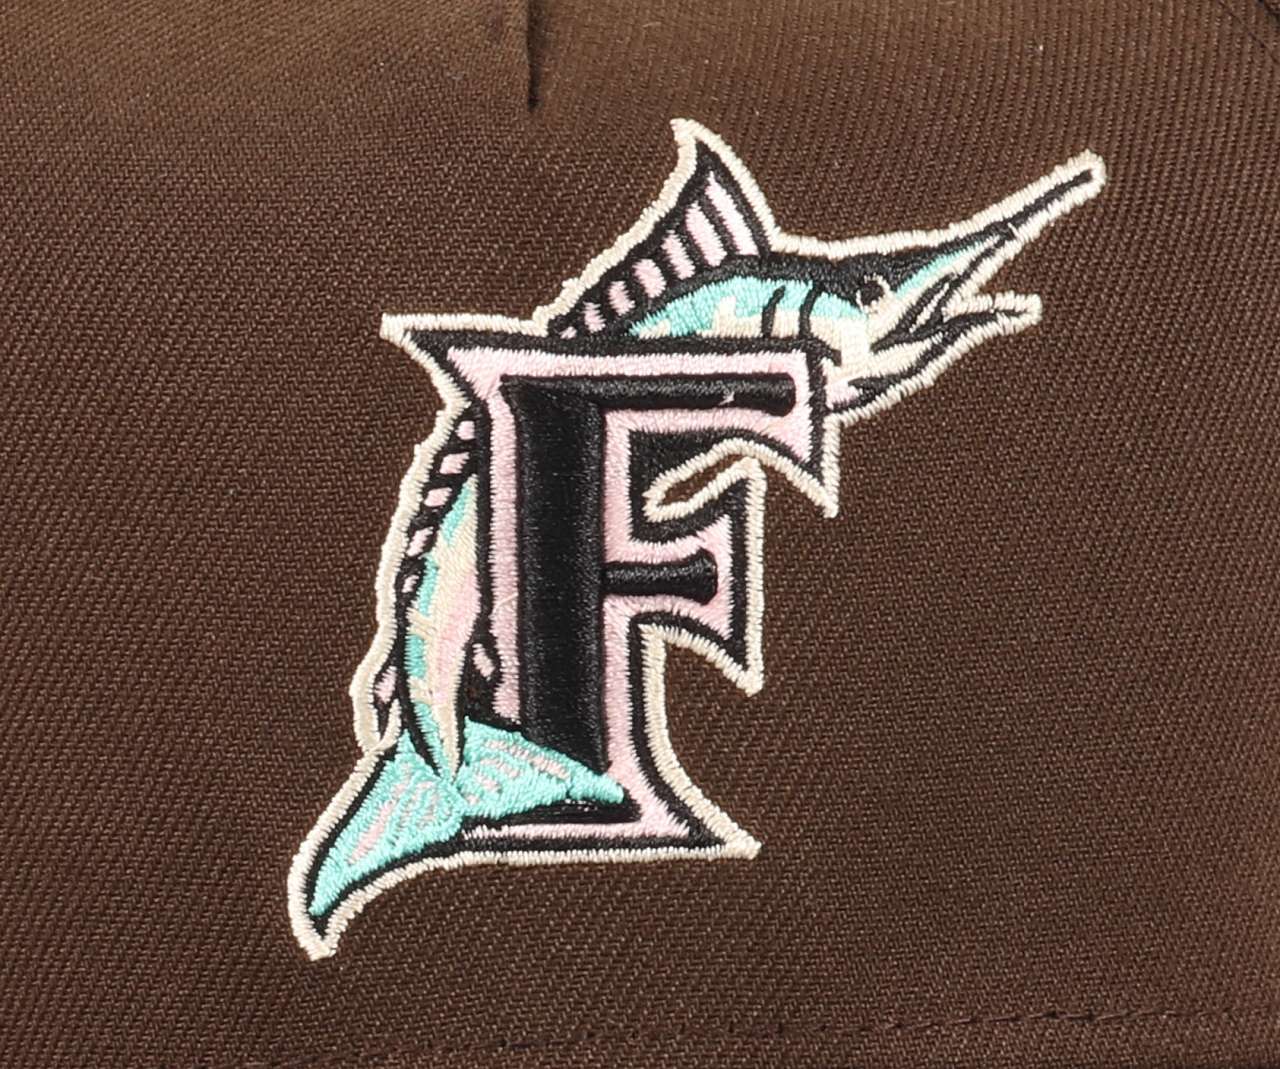 Florida Marlins MLB 10th Anniversary Sidepatch Walnut 9Forty A-Frame Snapback Cap New Era